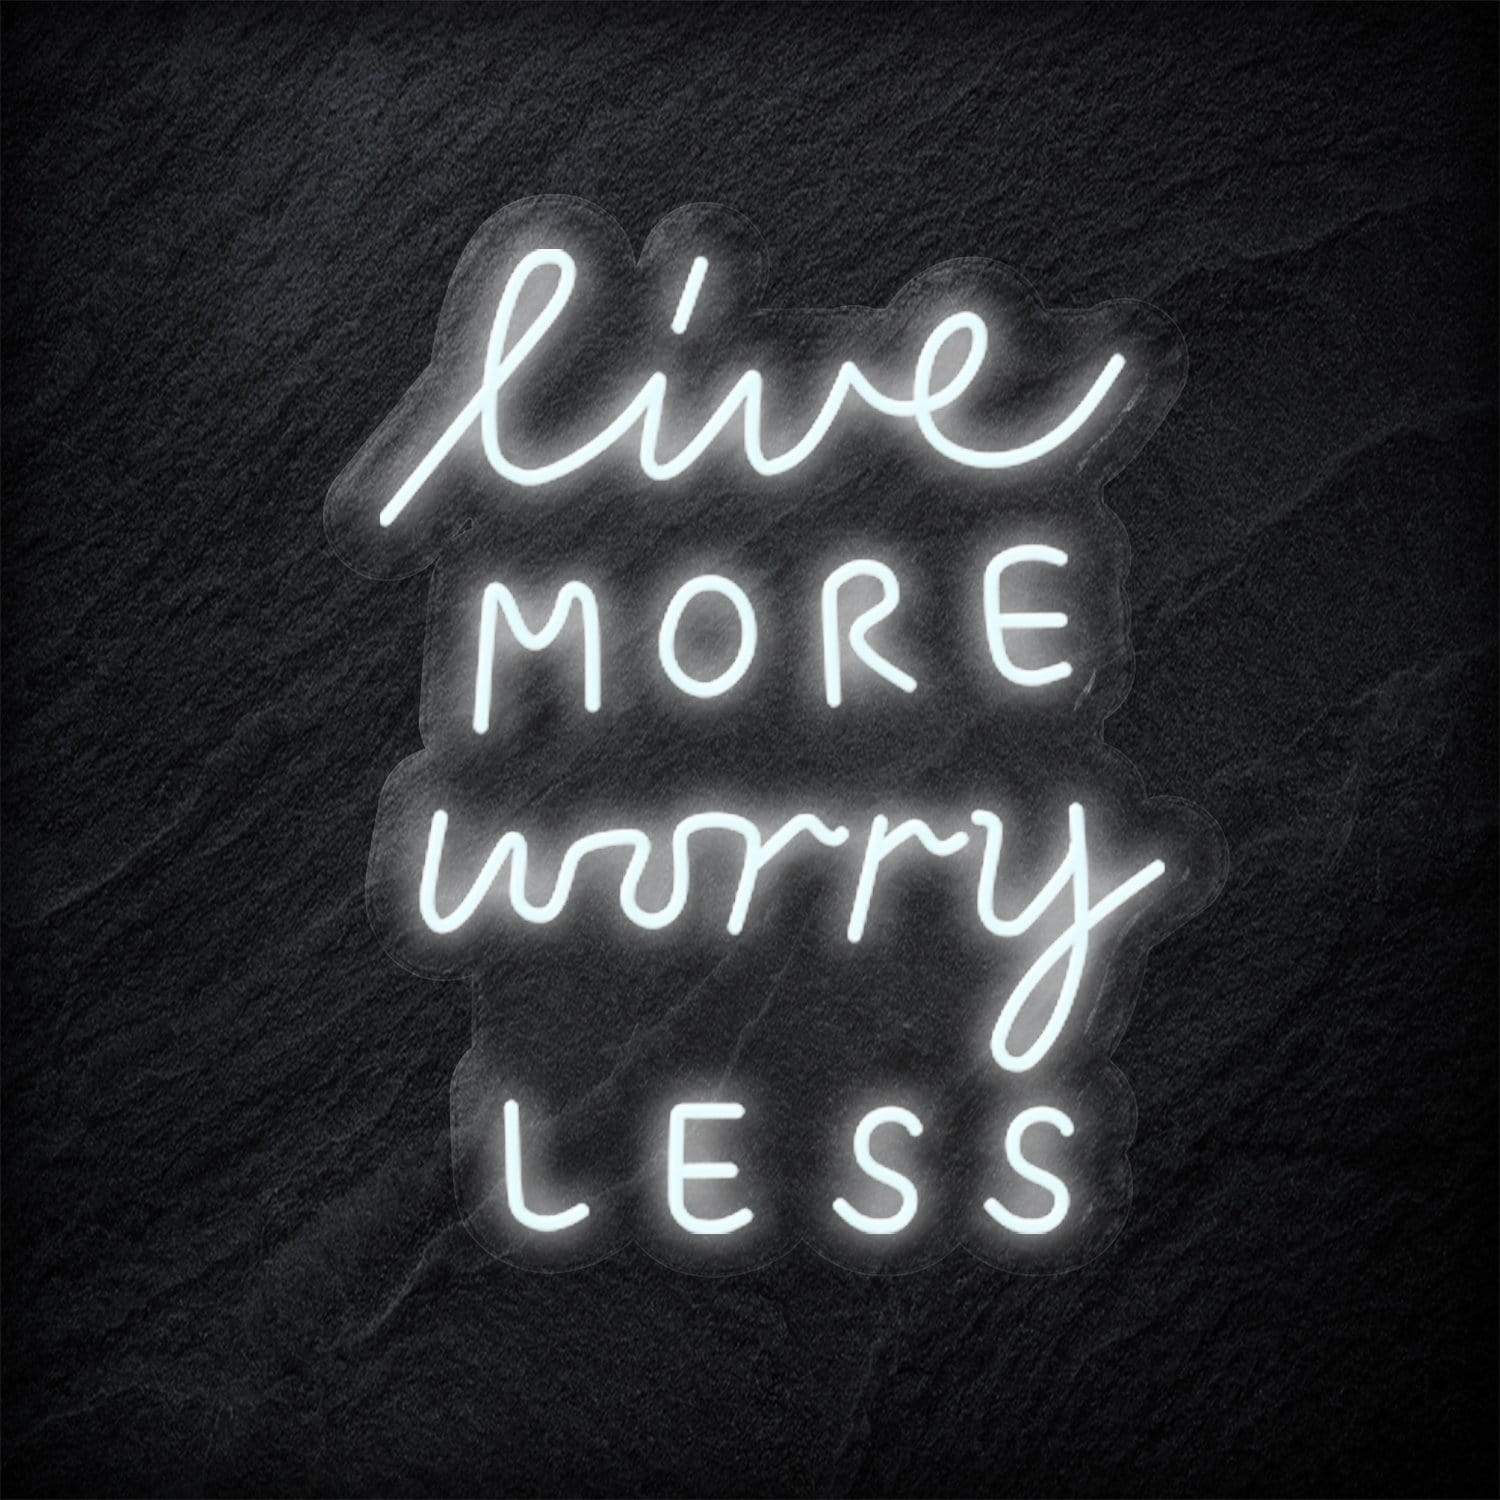 "Live More Worry Less" LED Neon Schriftzug - NEONEVERGLOW